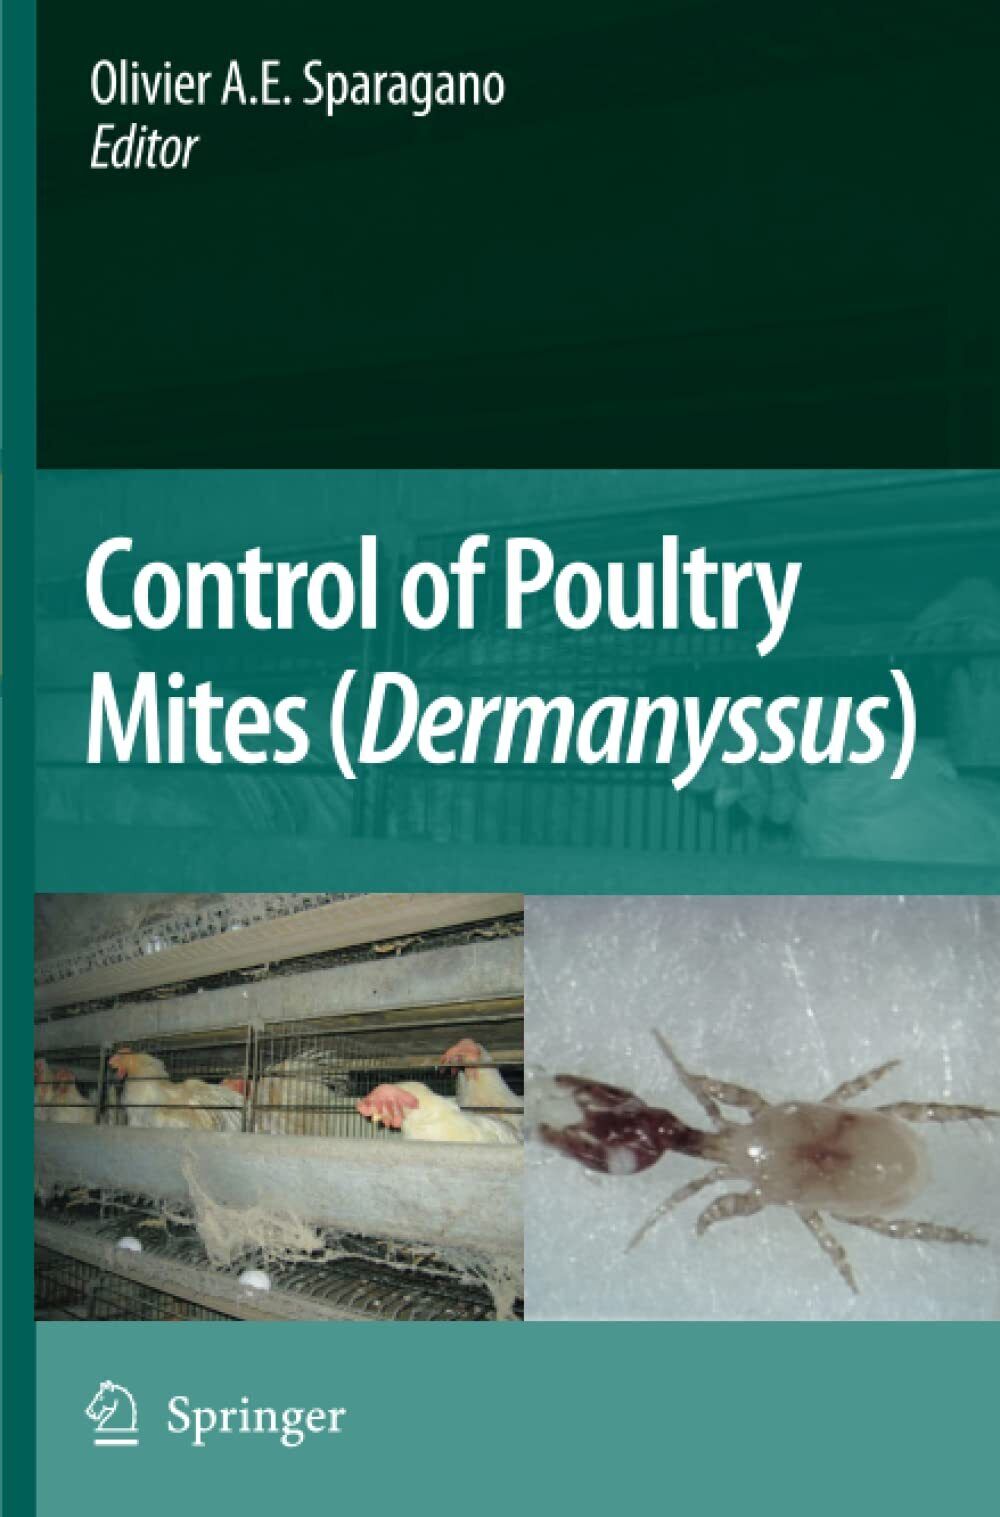 Control of Poultry Mites (Dermanyssus) - Olivier Sparagano - Springer, 2010 libro usato